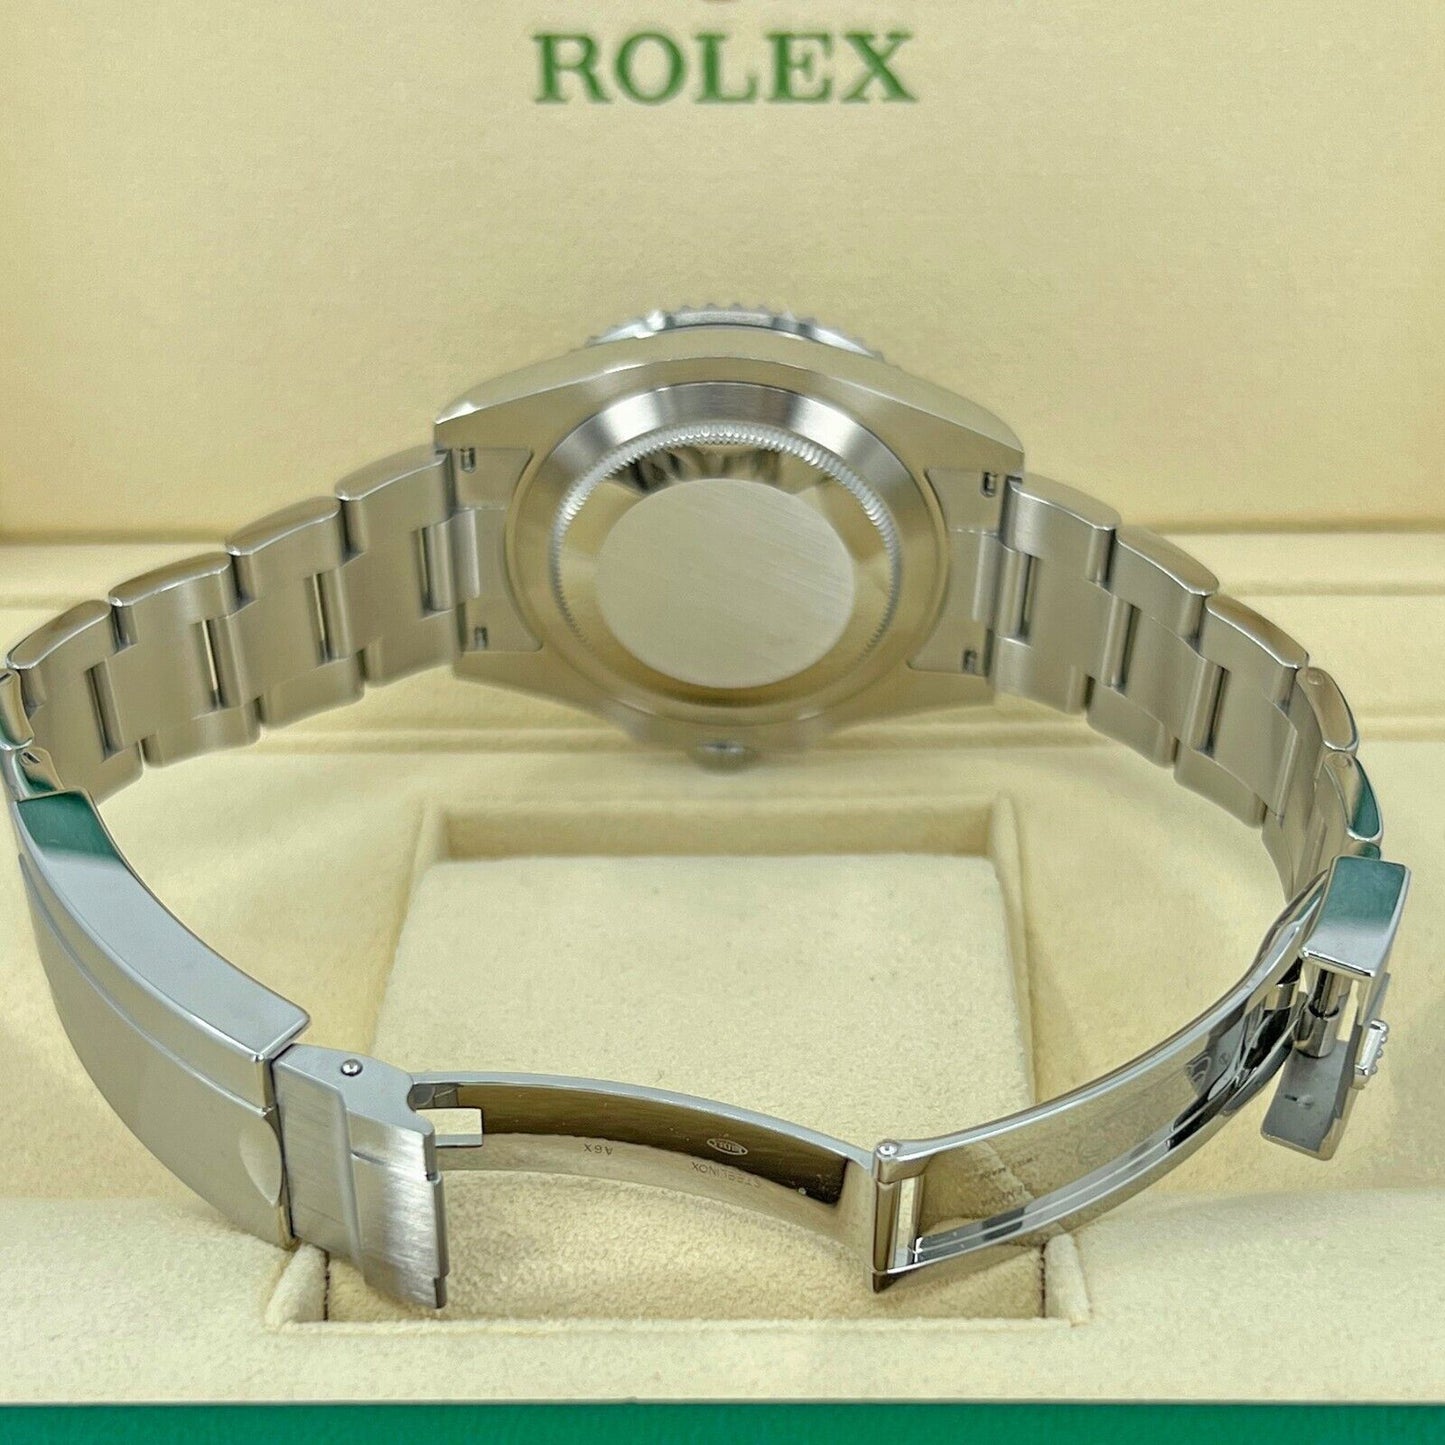 Rolex Submariner 41 Kermit Green Watch 126610LV – 11:11 NY